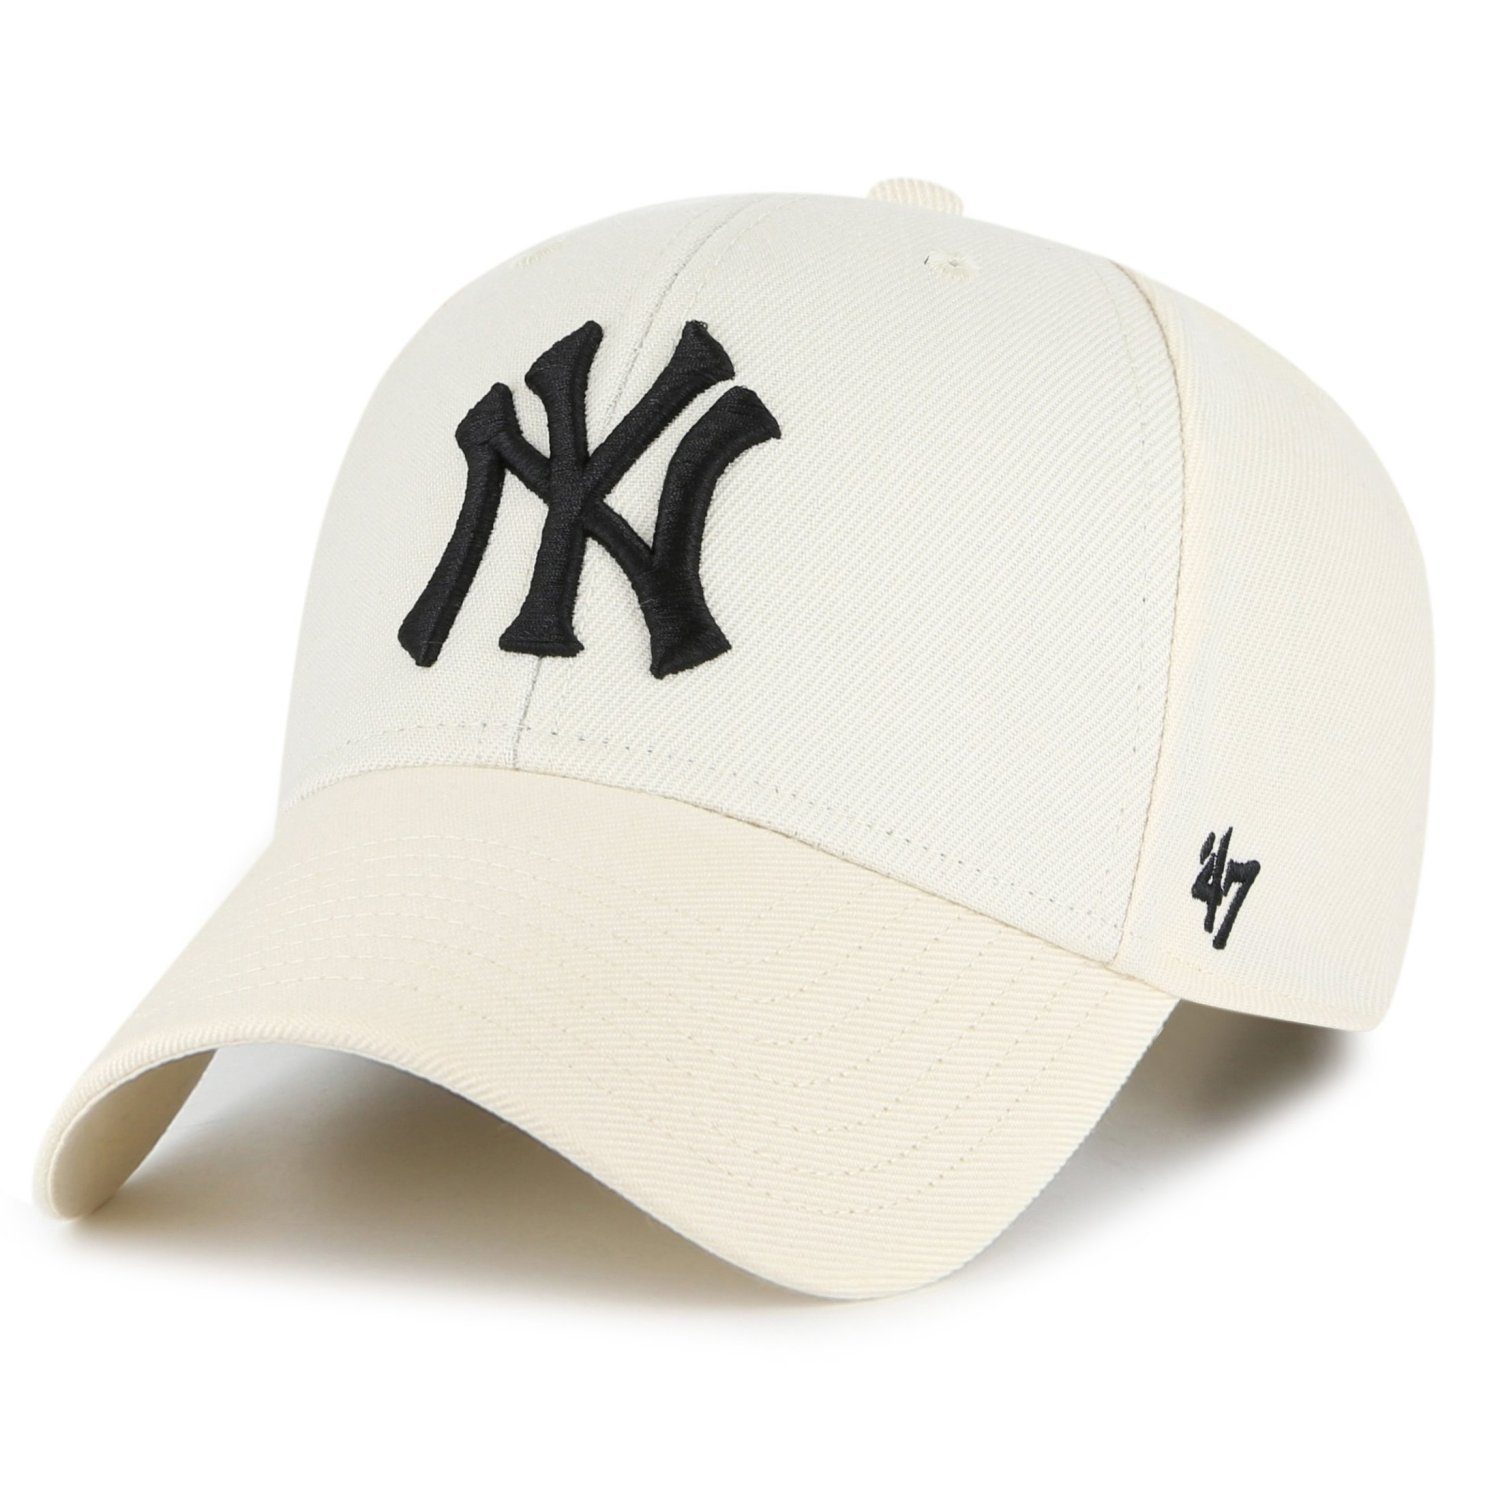 '47 New MLB York Cap Snapback Yankees Brand